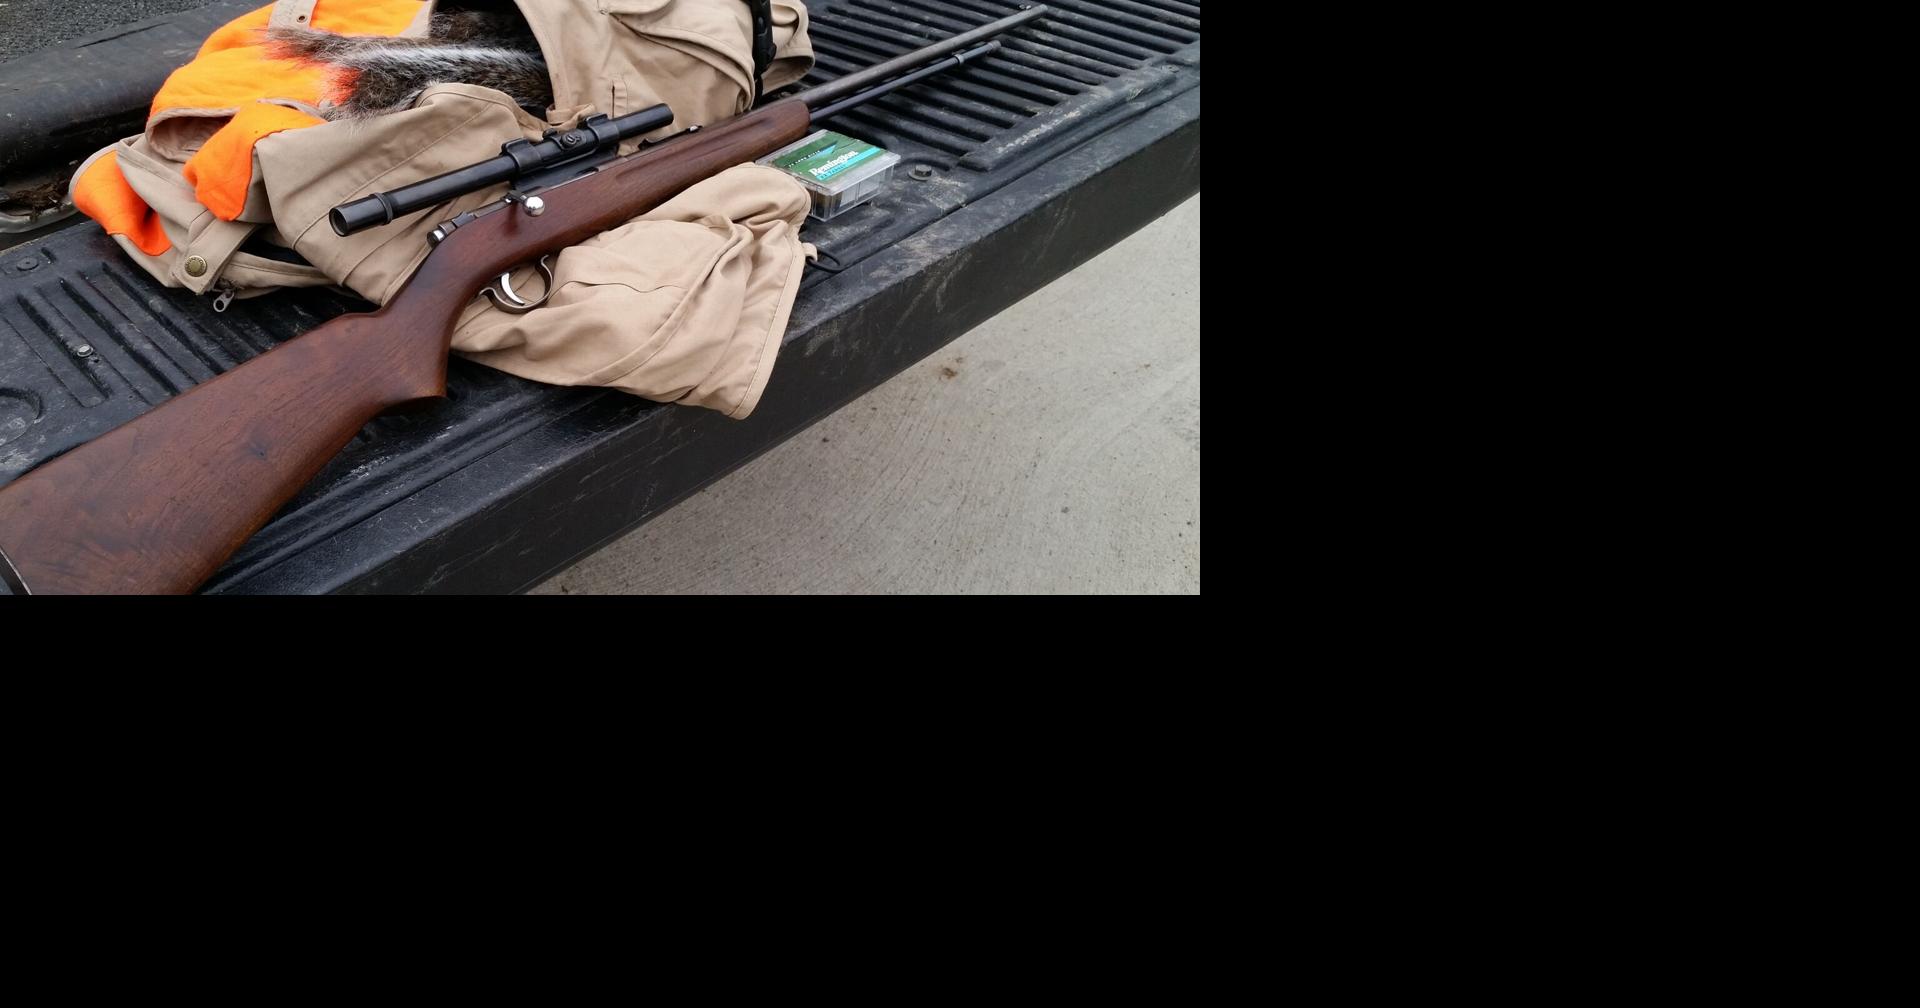 I'll take the .22 long rifle, Outdoors